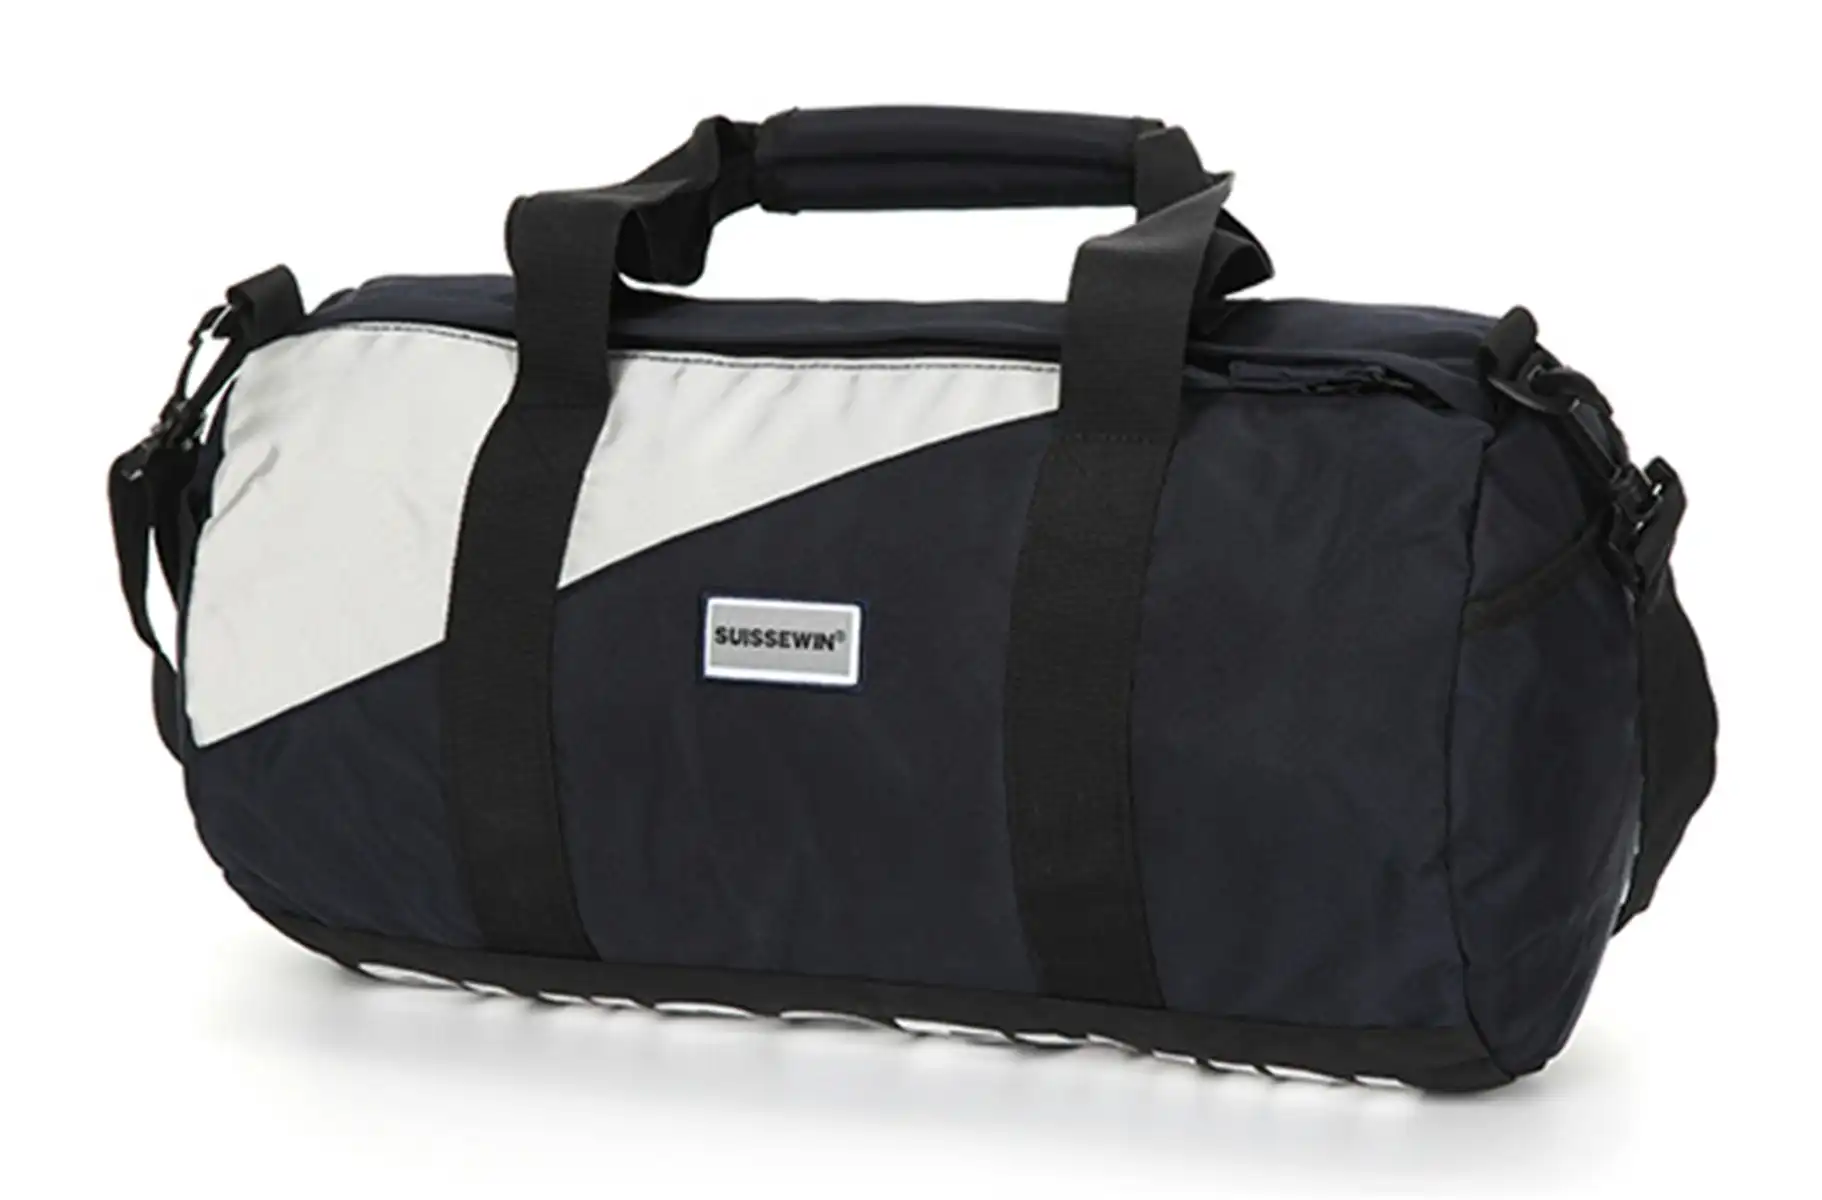 Suissewin Swiss Water-Resistant Gym Sport Bag Crossbody Travel Duffel Bag SNK18008 Black